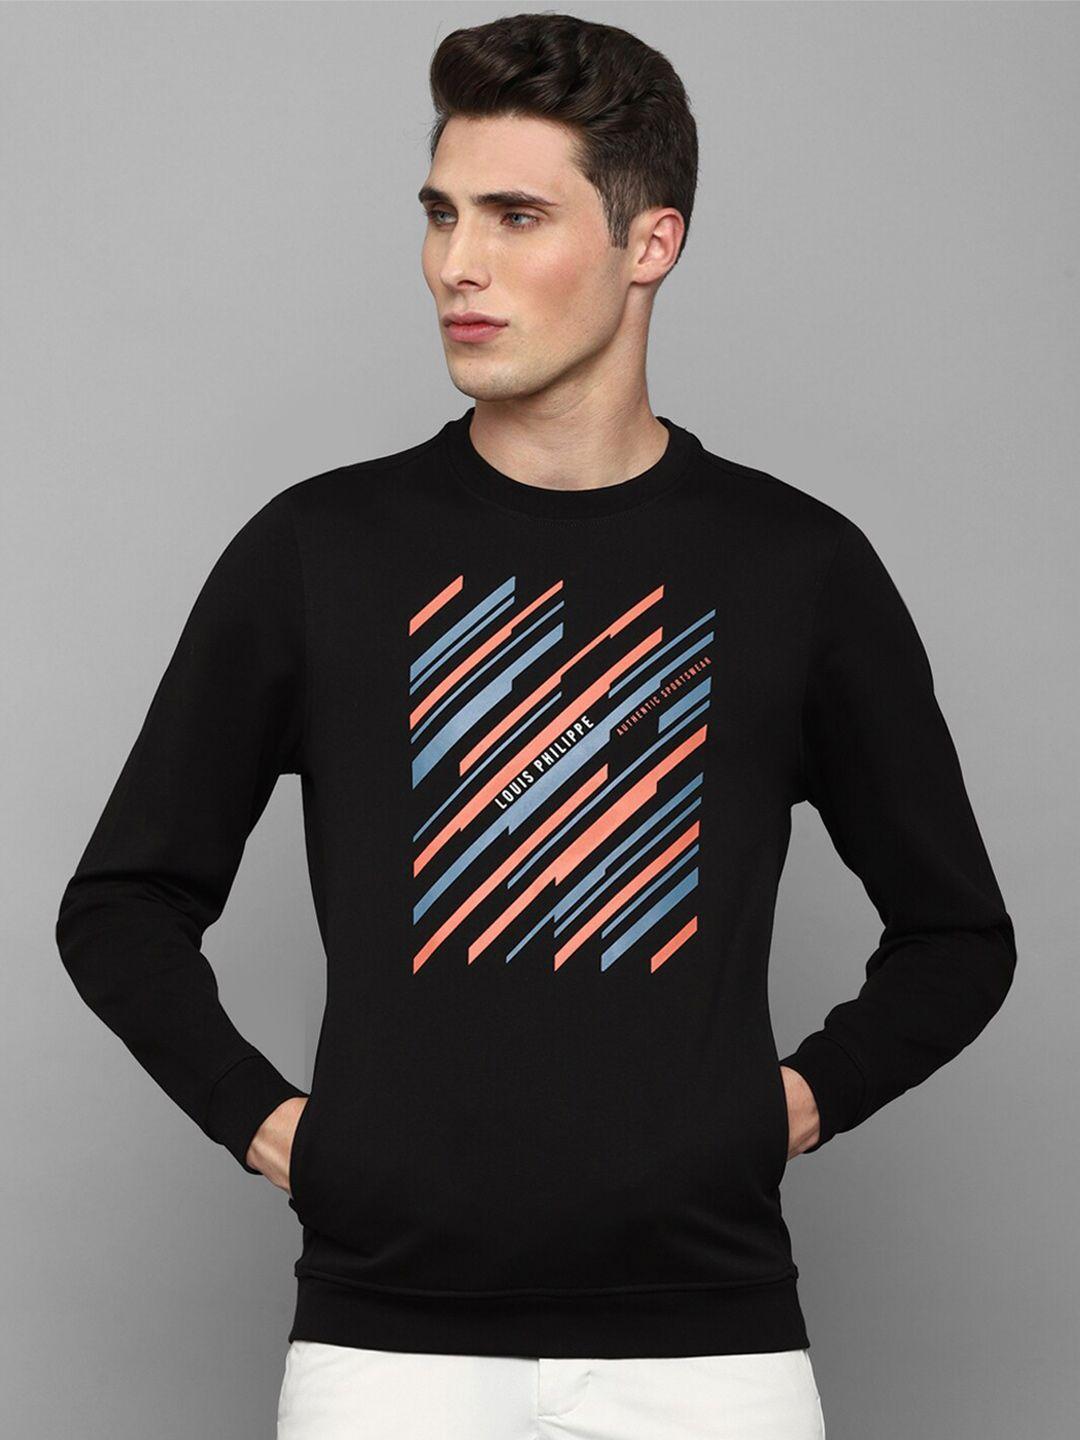 louis-philippe-sport-men-graphic-printed-sweatshirt